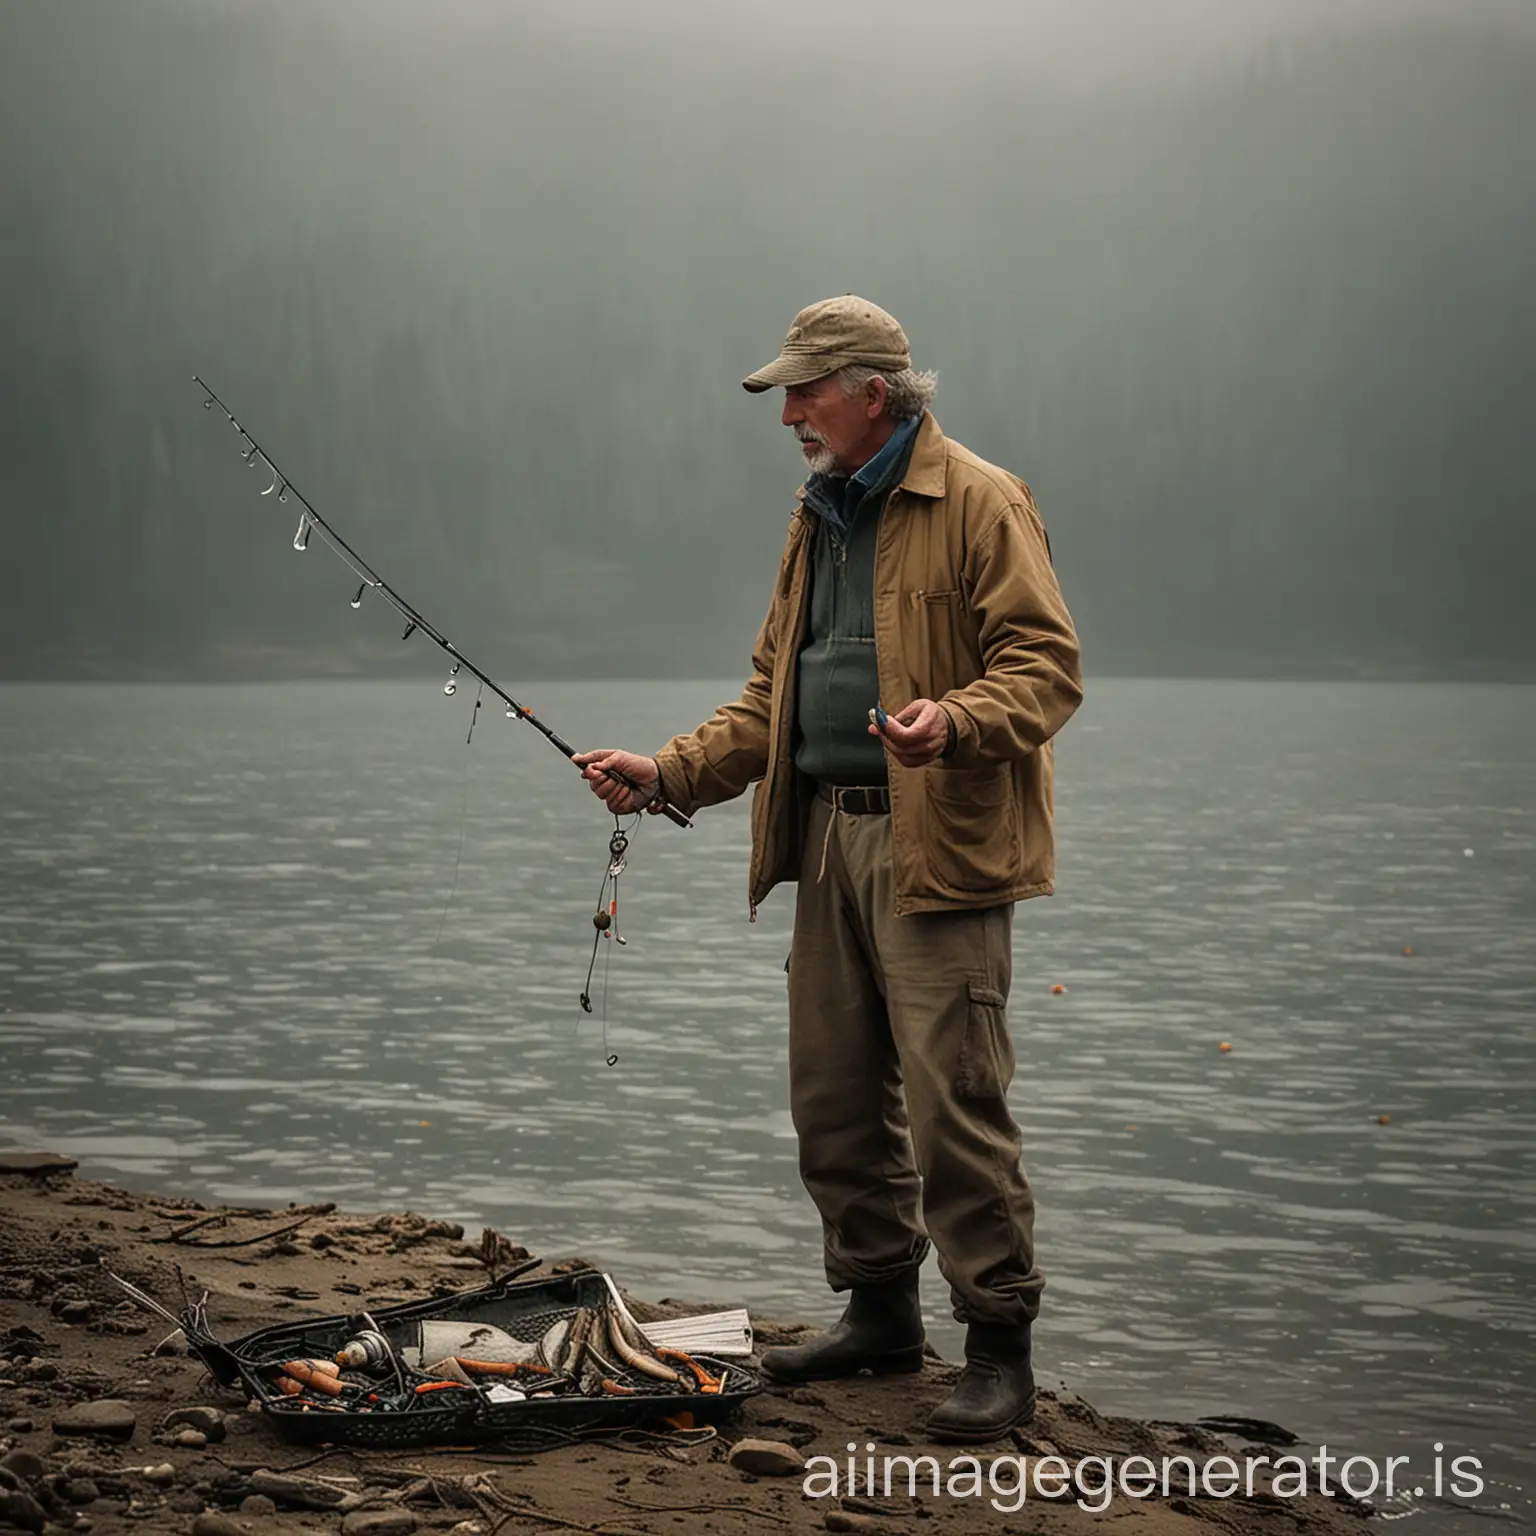 A fisherman tells a story